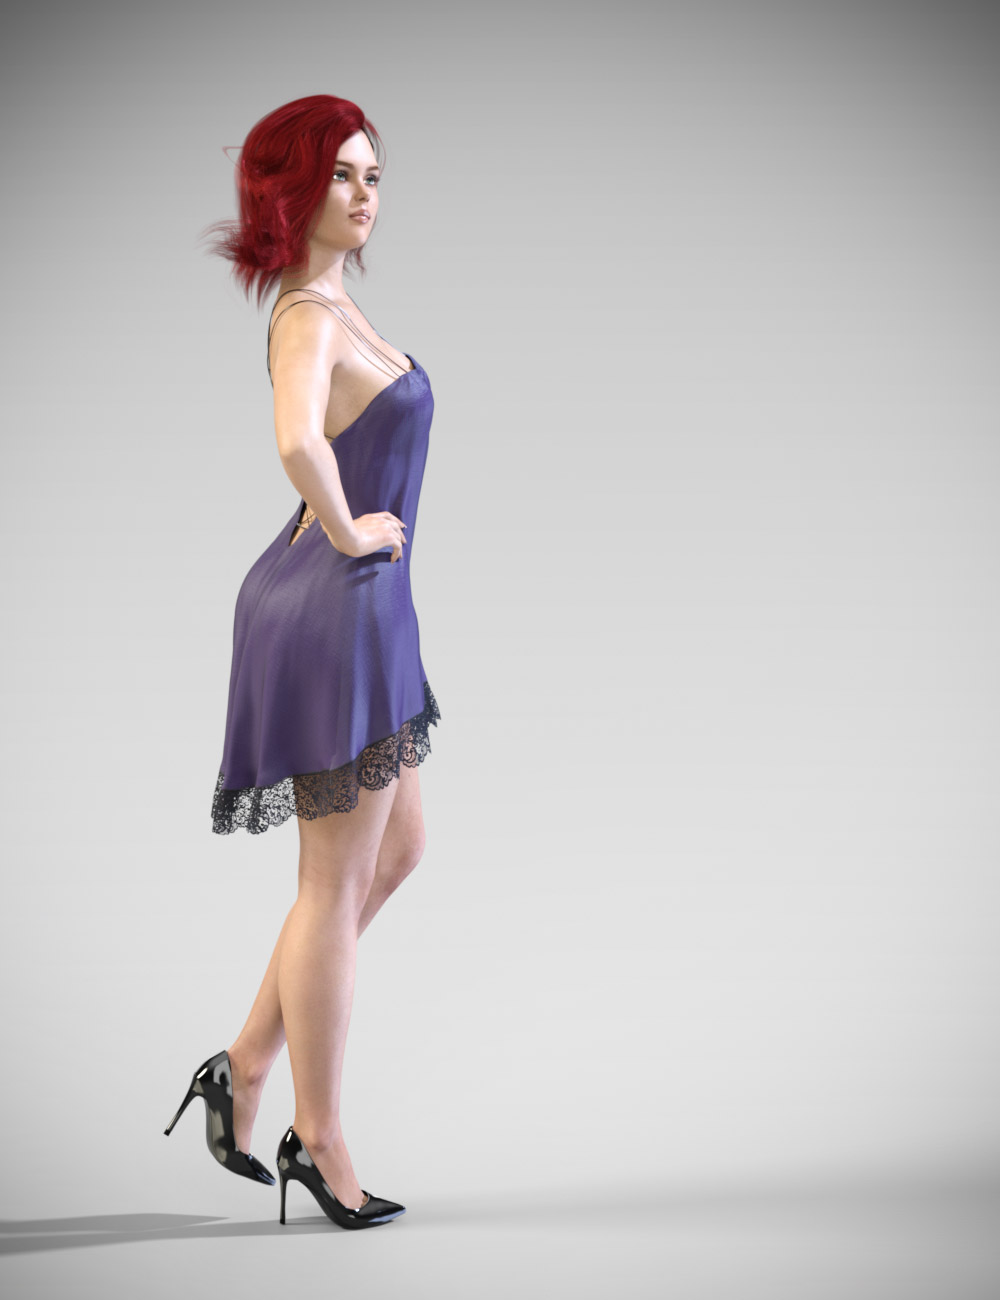 How To Render Beautiful Legs by: Dreamlight, 3D Models by Daz 3D